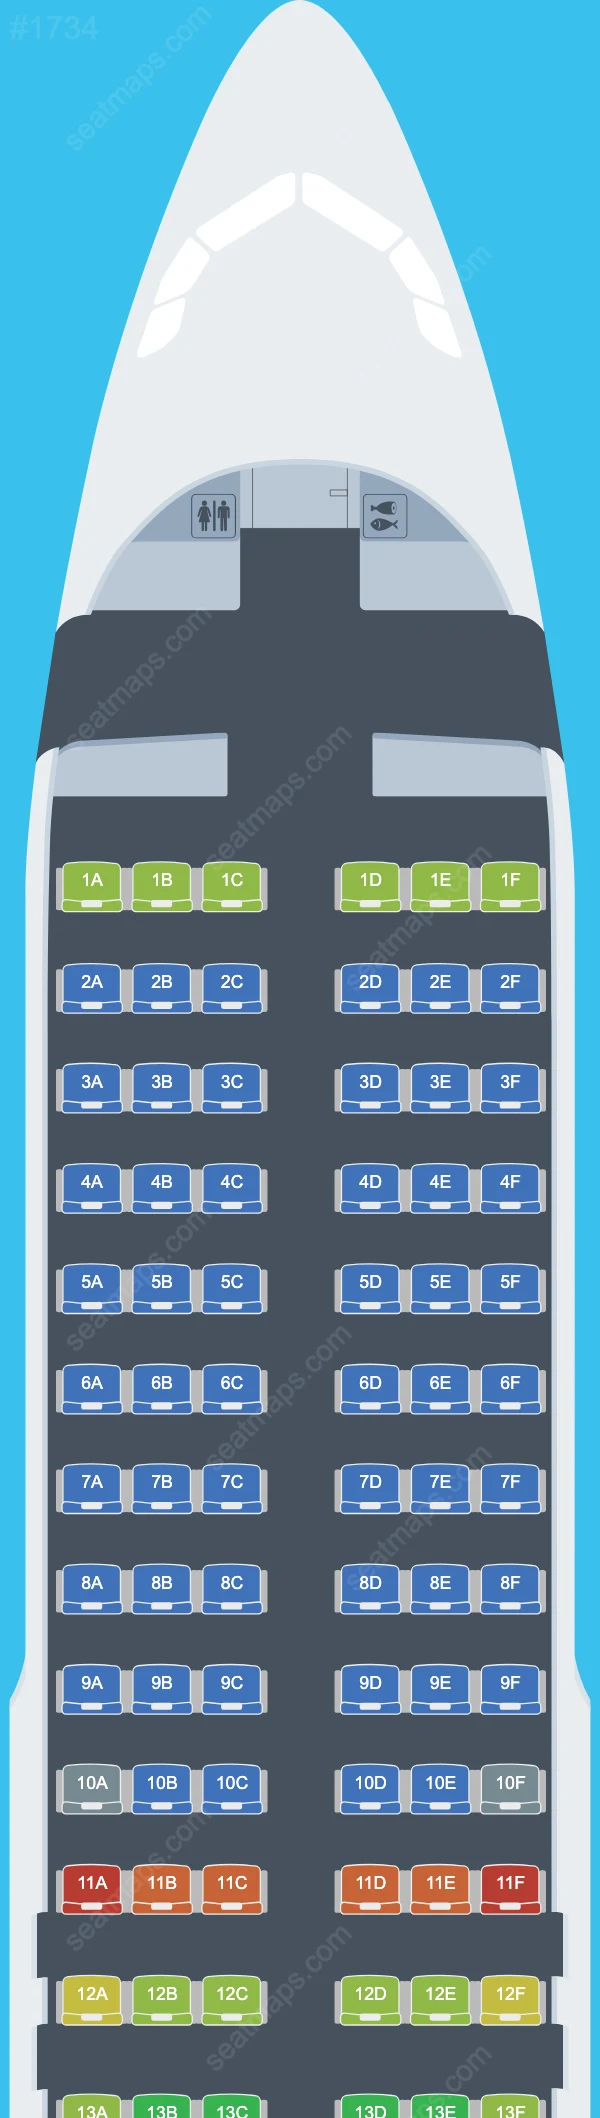 Схема салонов easyJet UK в самолетах Airbus A320 A320-200 V.2